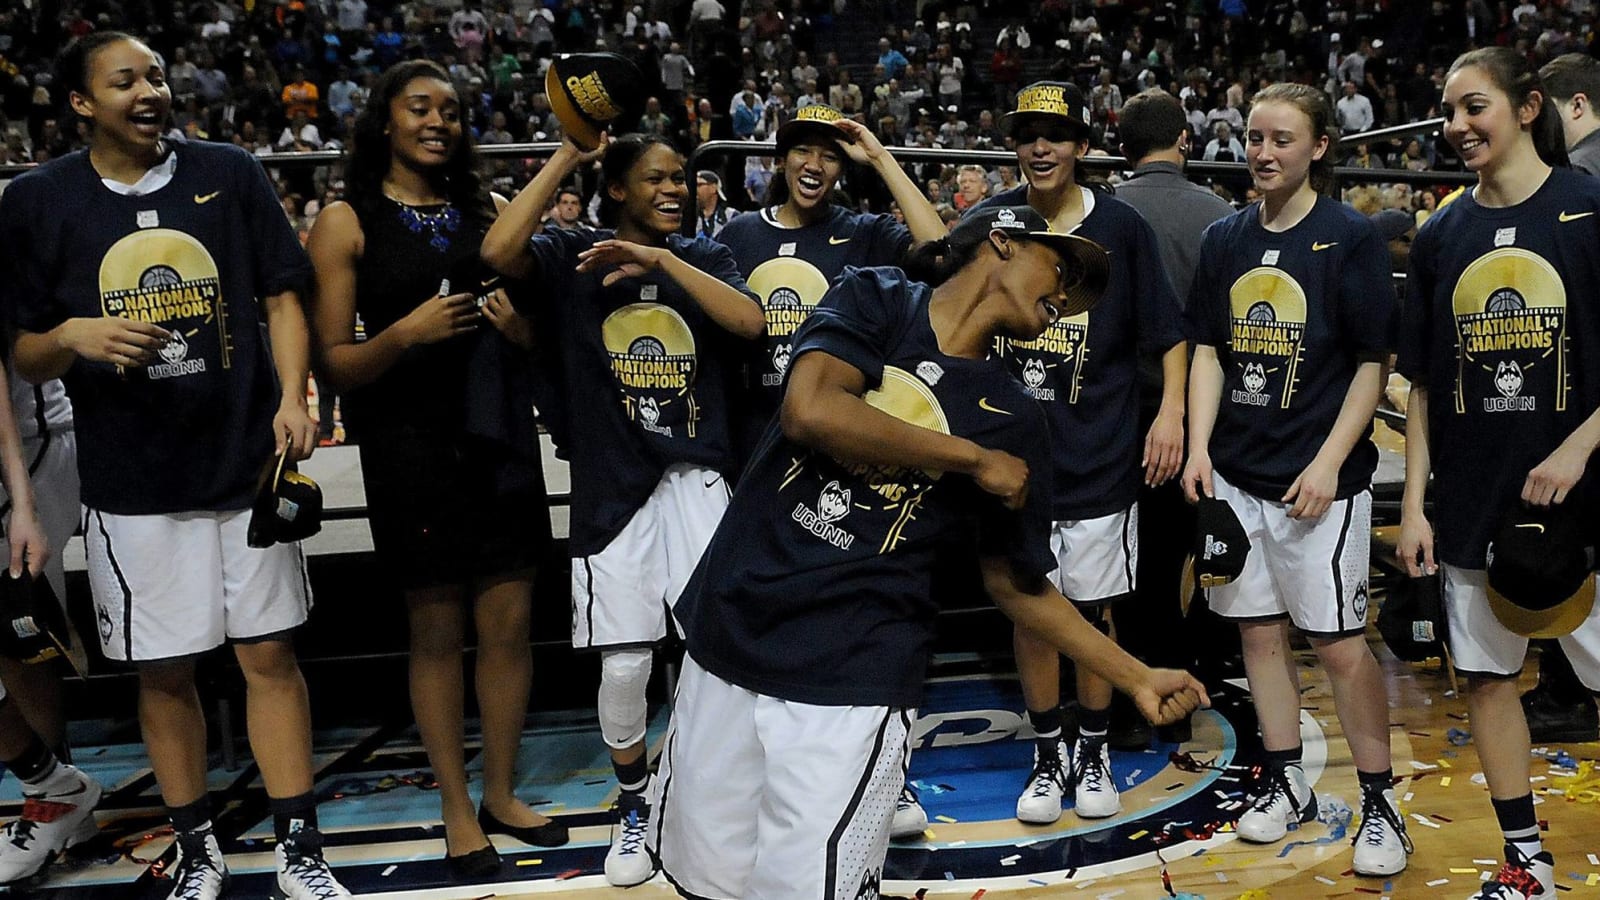 The 'NCAA basketball perfect seasons' quiz